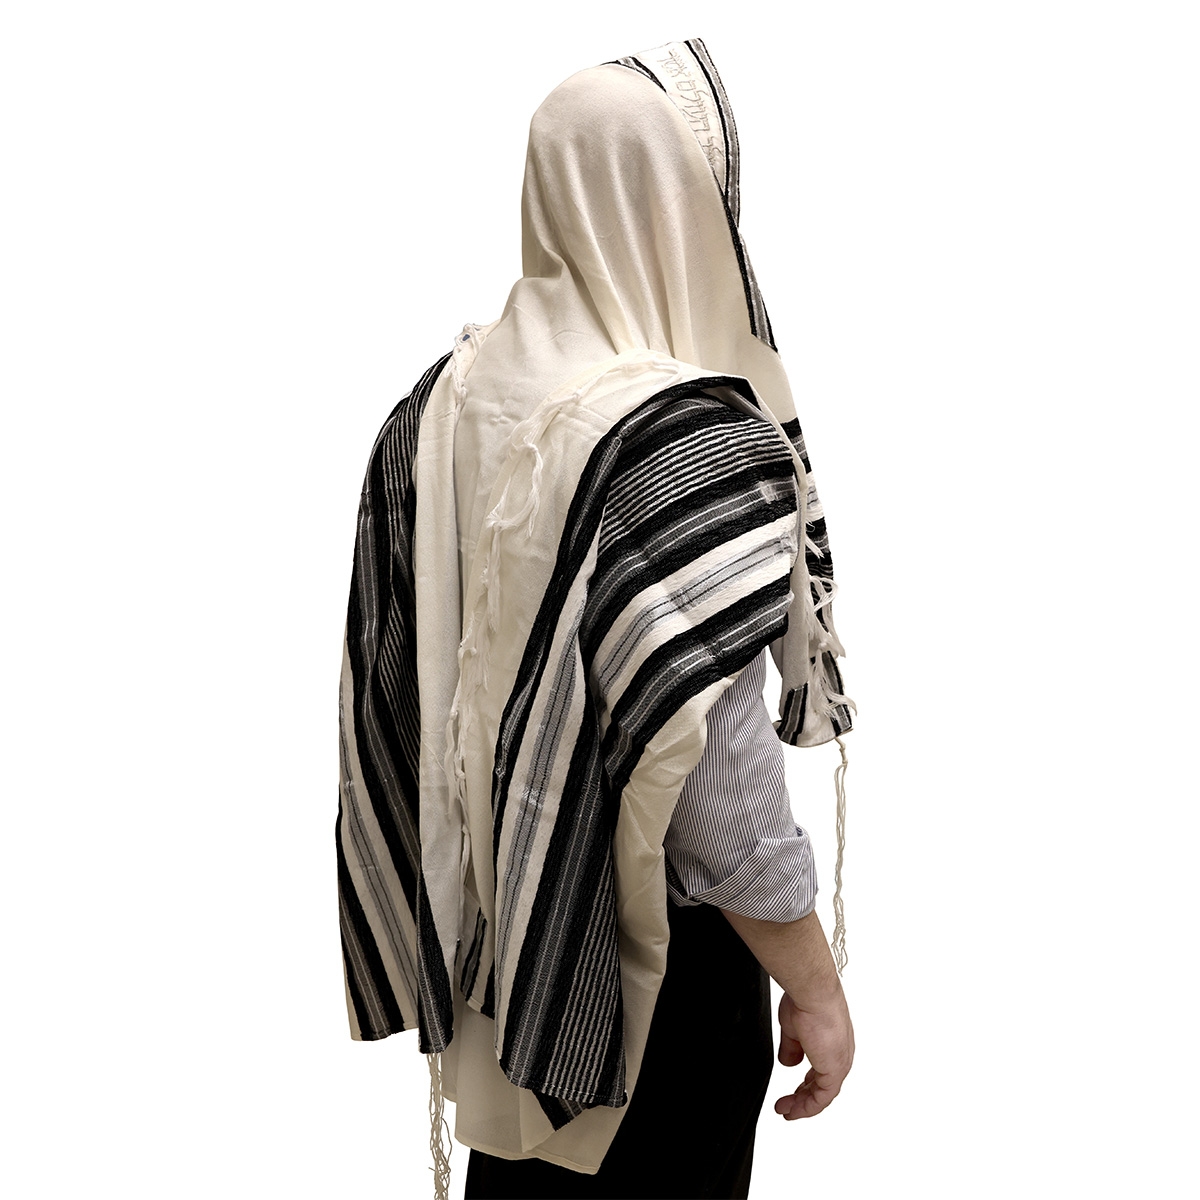 Handwoven Black & Silver Pattern Tallit (Prayer Shawl) Set from Rikmat Elimelech - 1